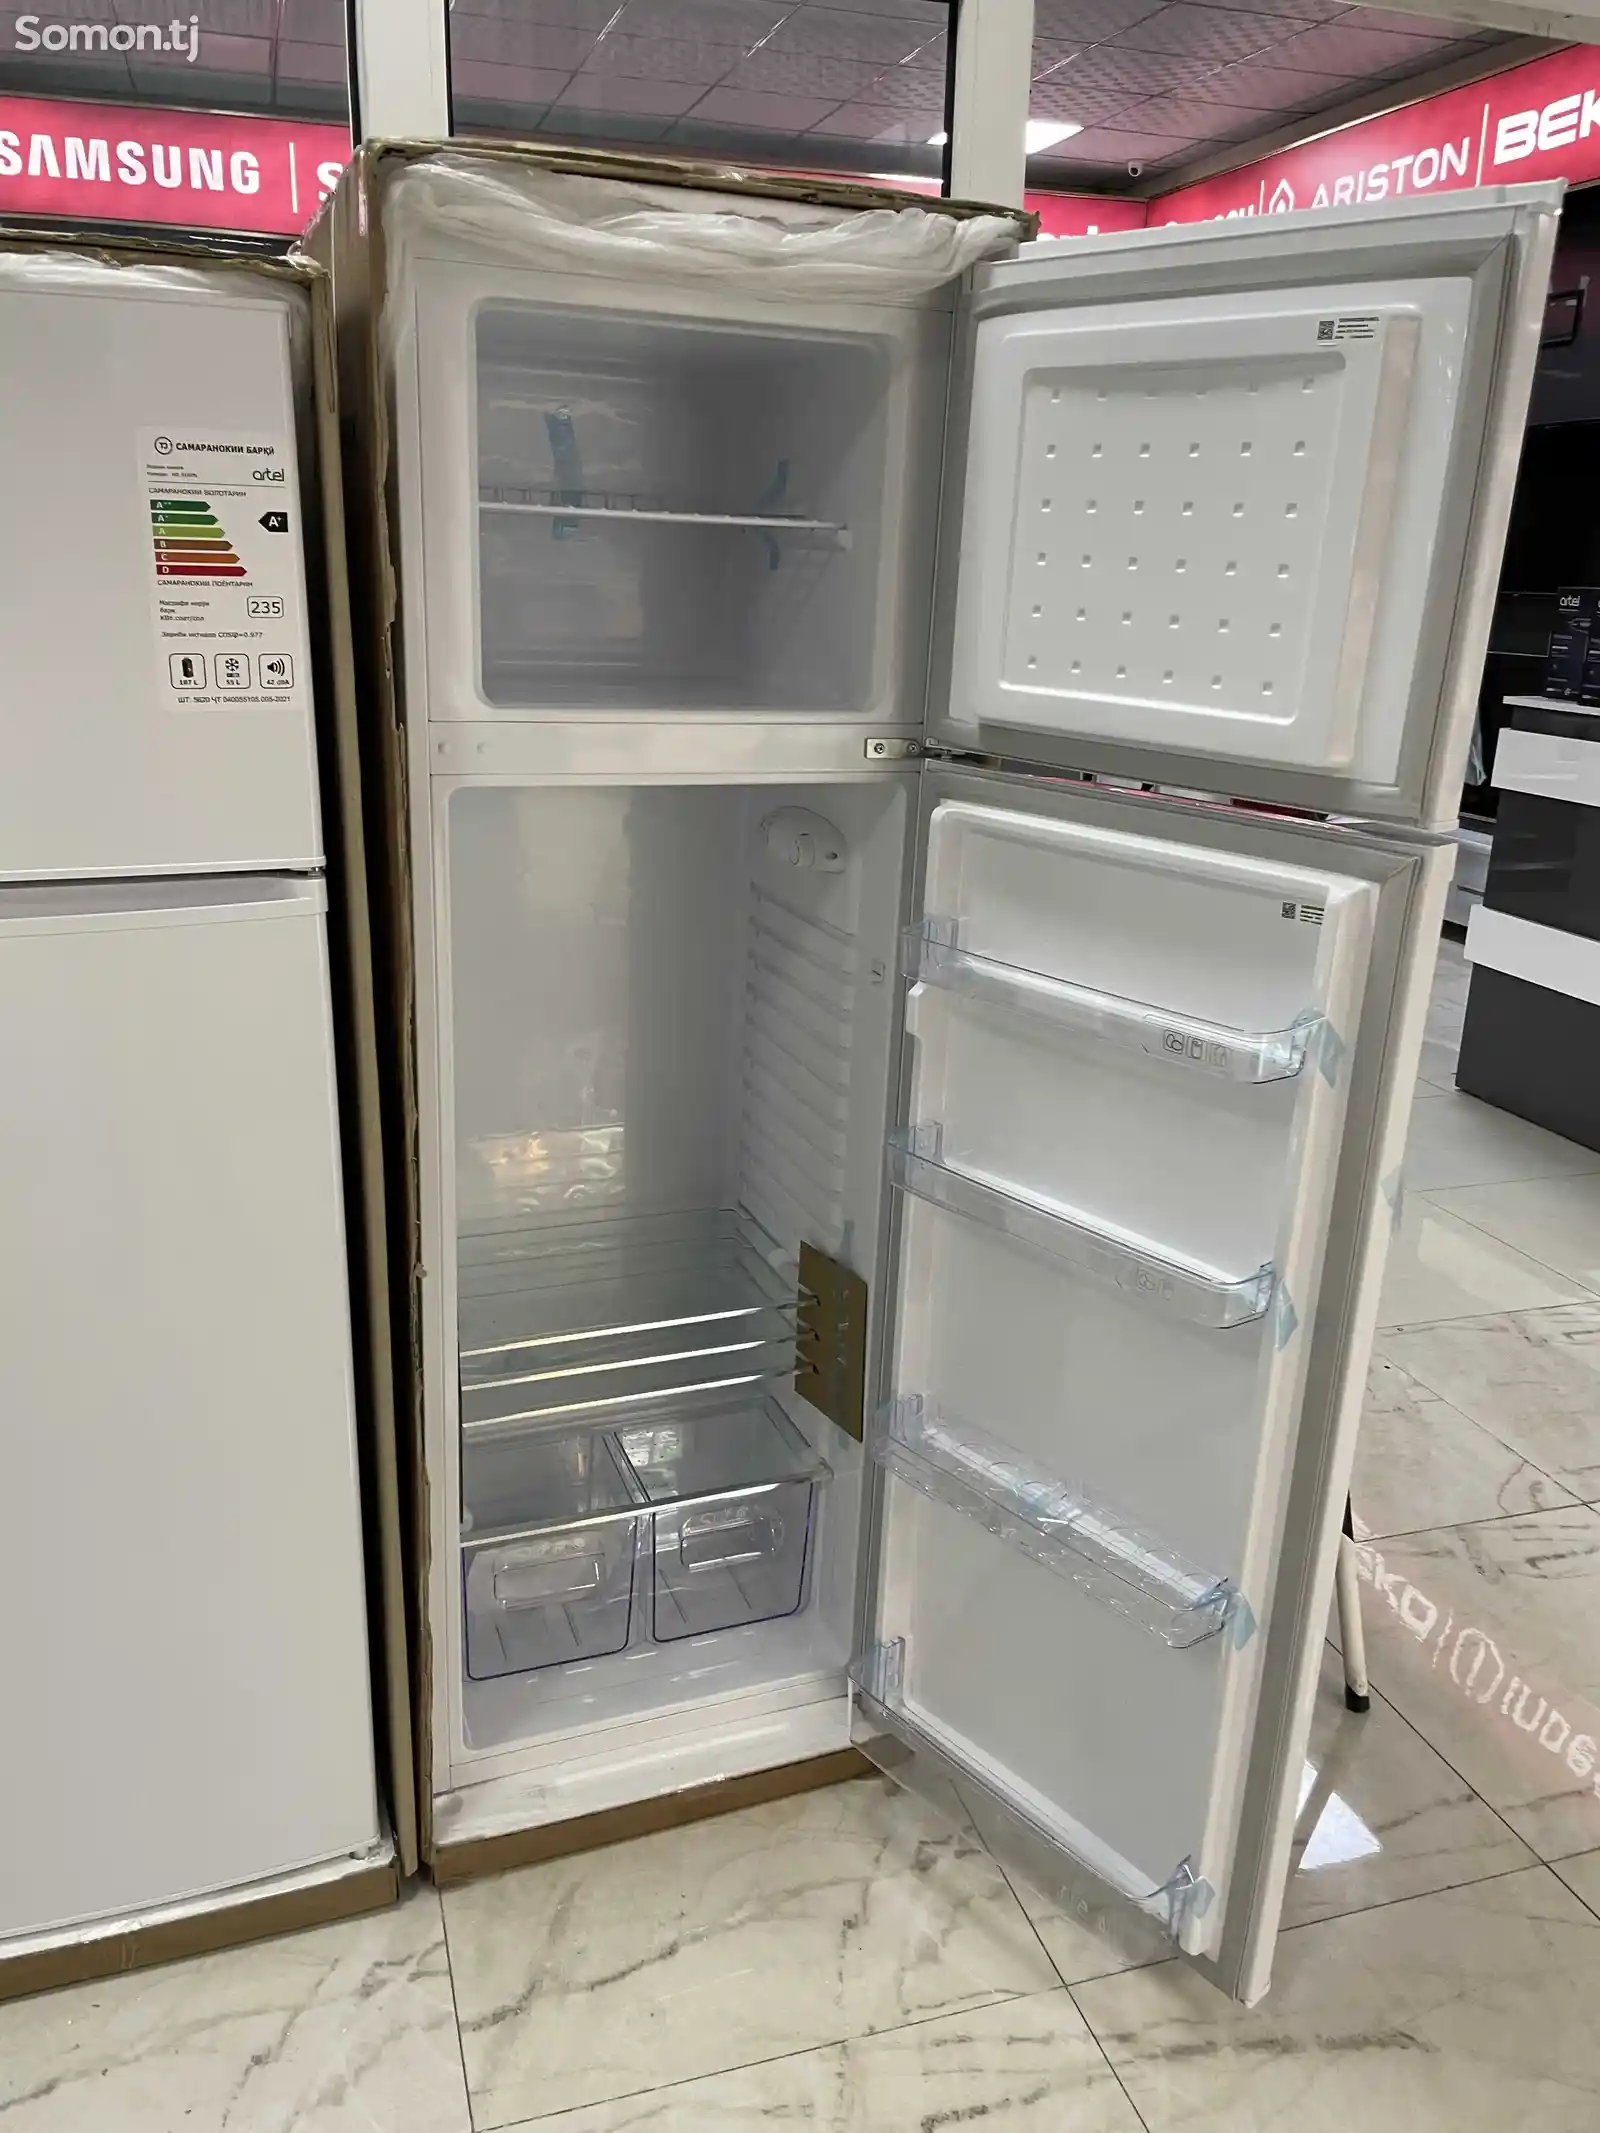 Холодильник Artel-3